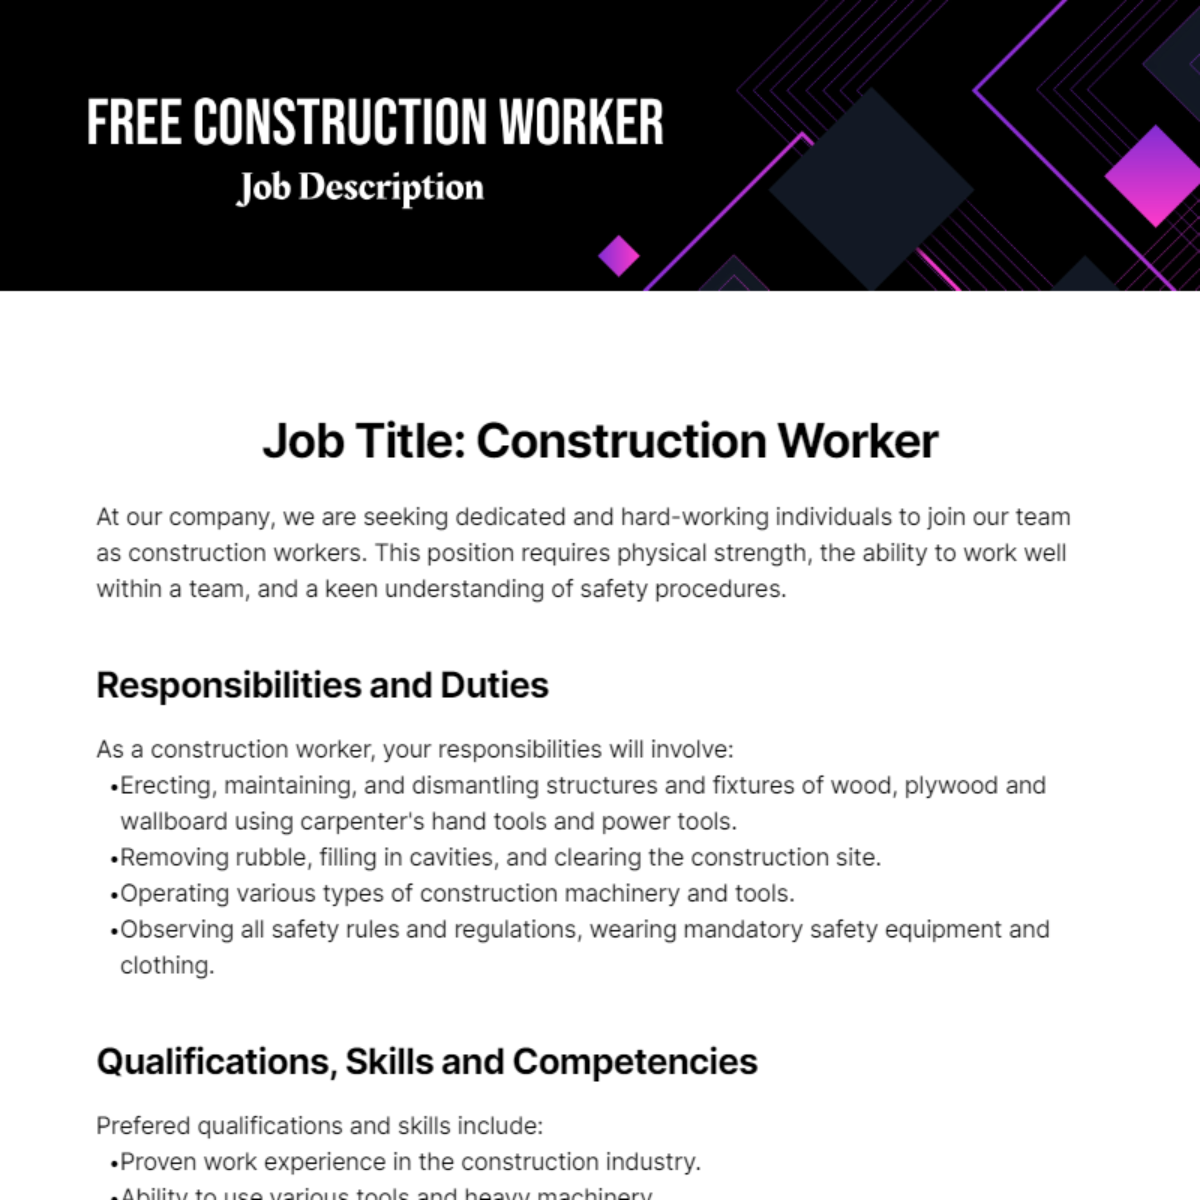 Free Construction Worker Job Description Template